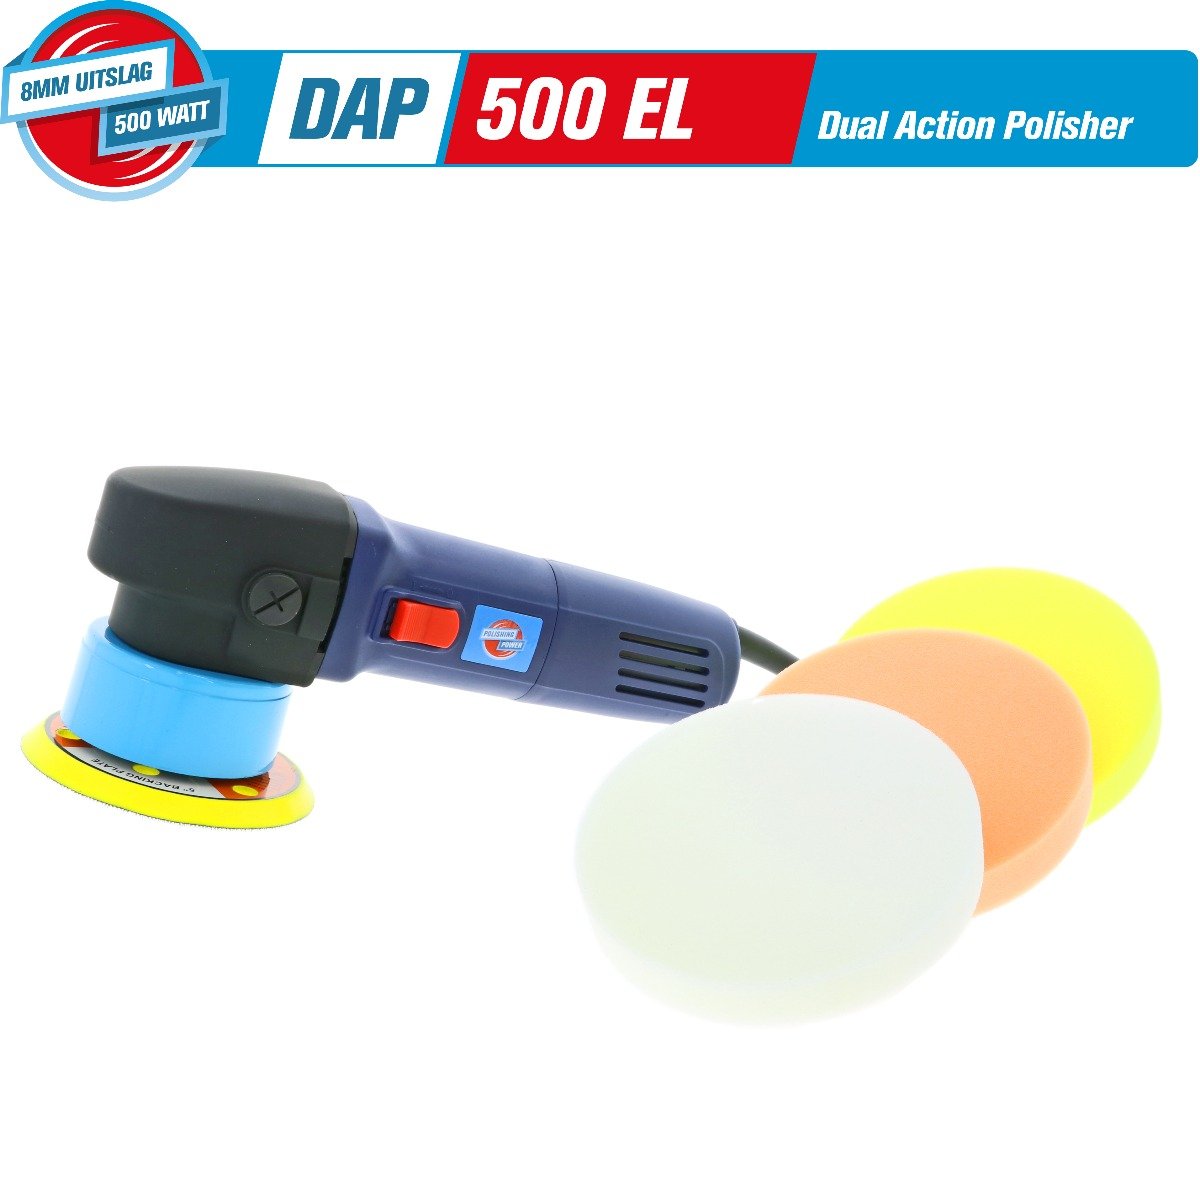 DAP500 EL 8mm D/A 500 Watt - First Edition Pre-Order Kit